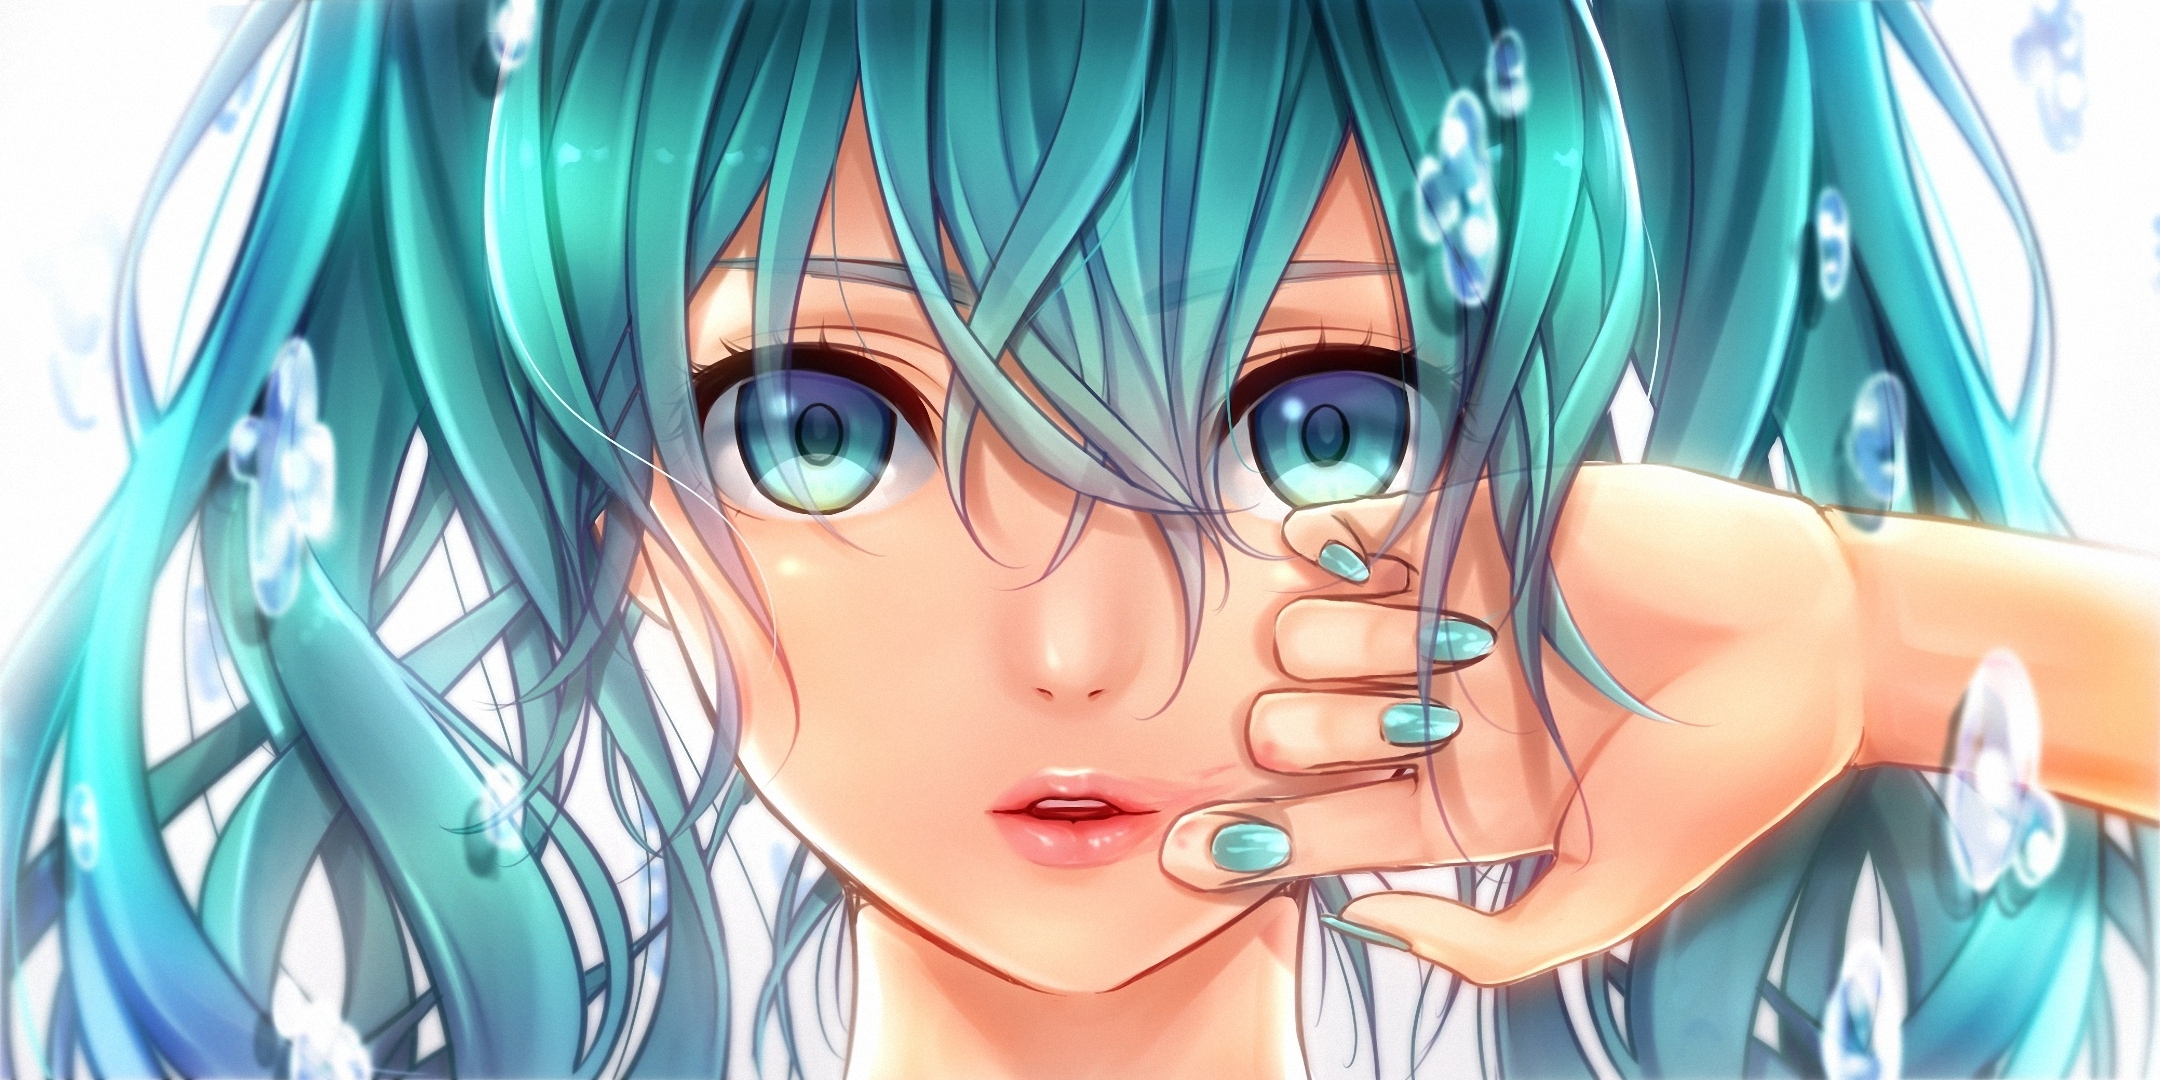 vocaloid, Eyes, Face, Glance, Light, Blue, Hair, Anime Wallpaper